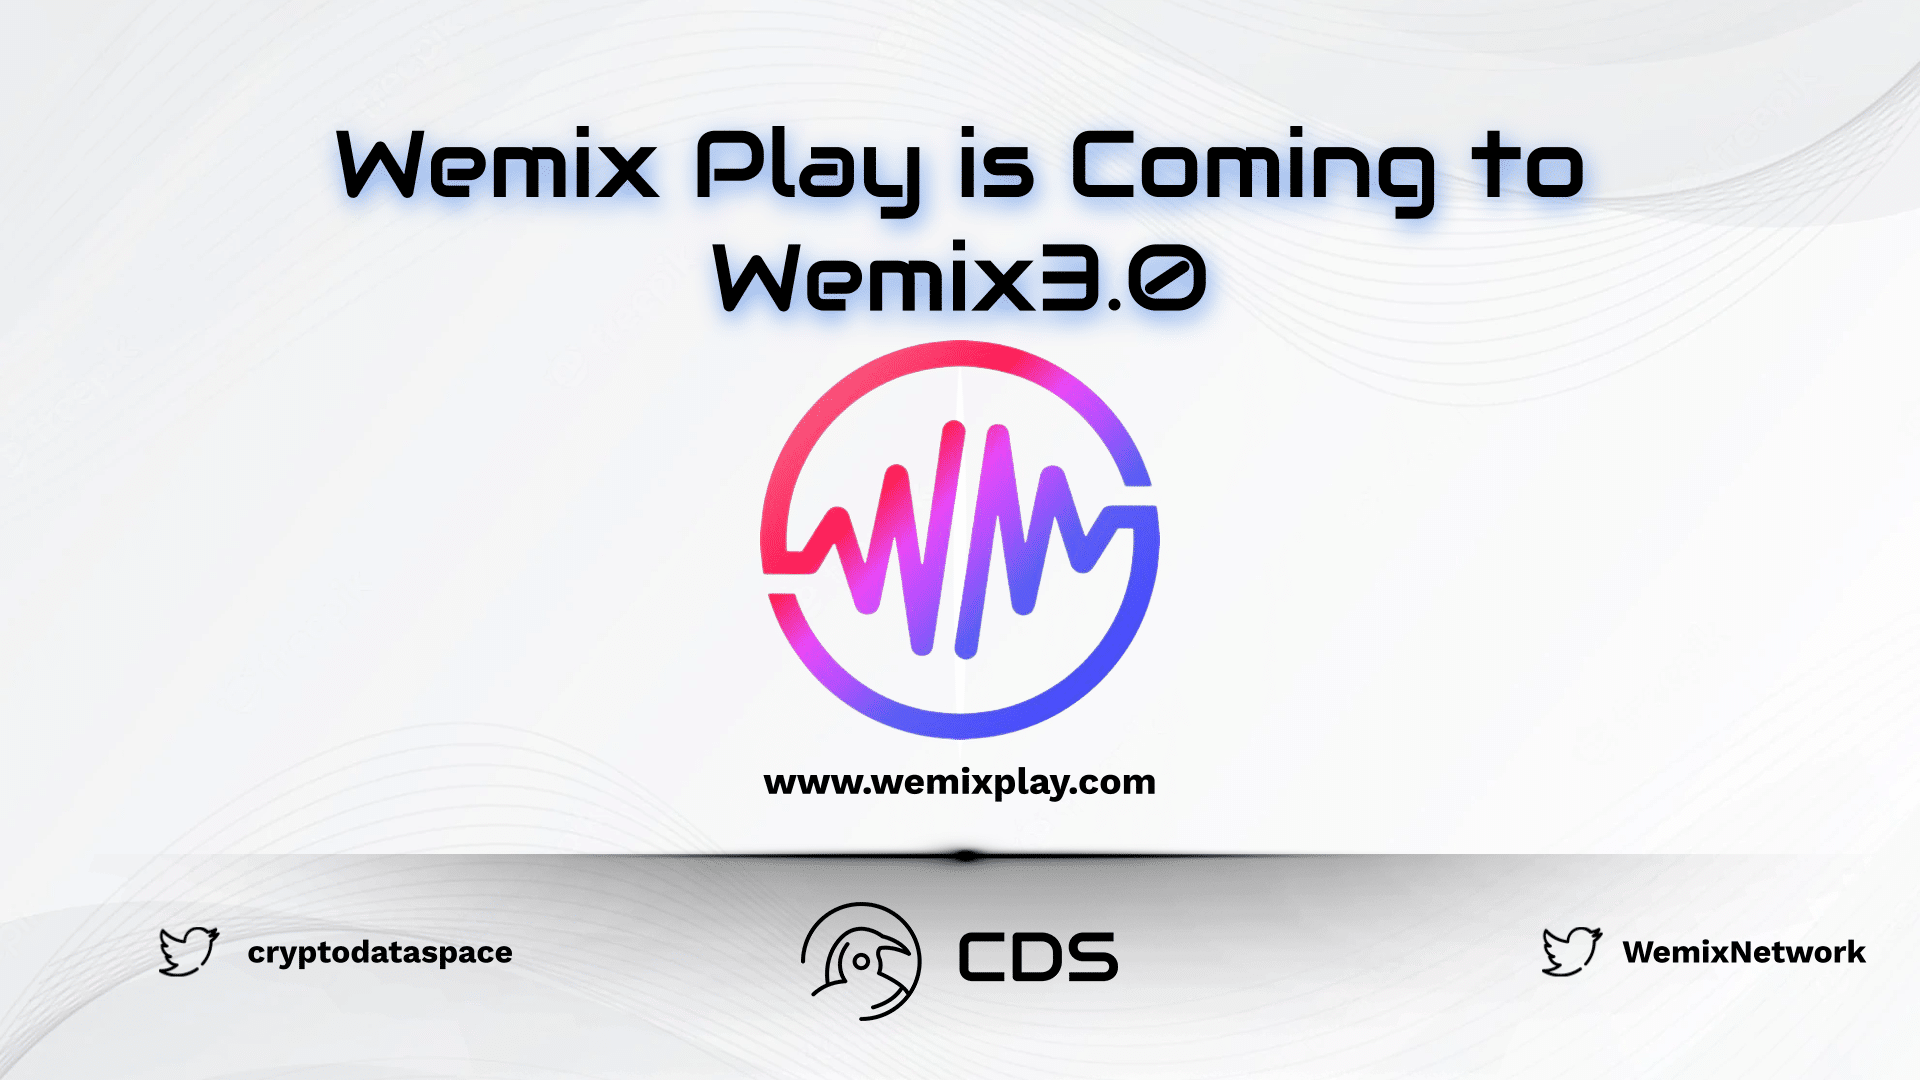 wemixplay is coming to wemix3.0